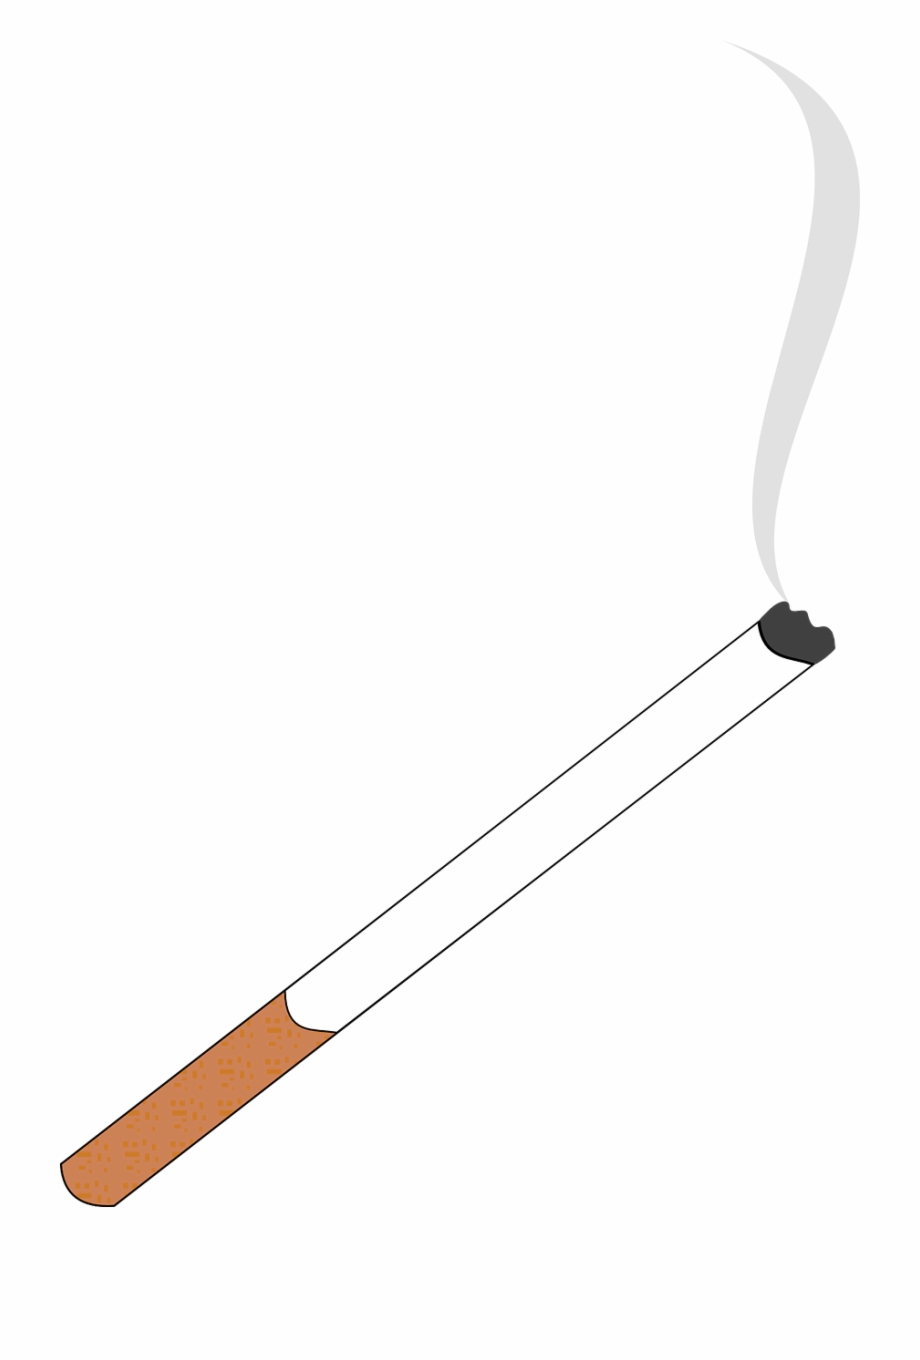 Cigarette Smoking Smoke Tobacco Png Image